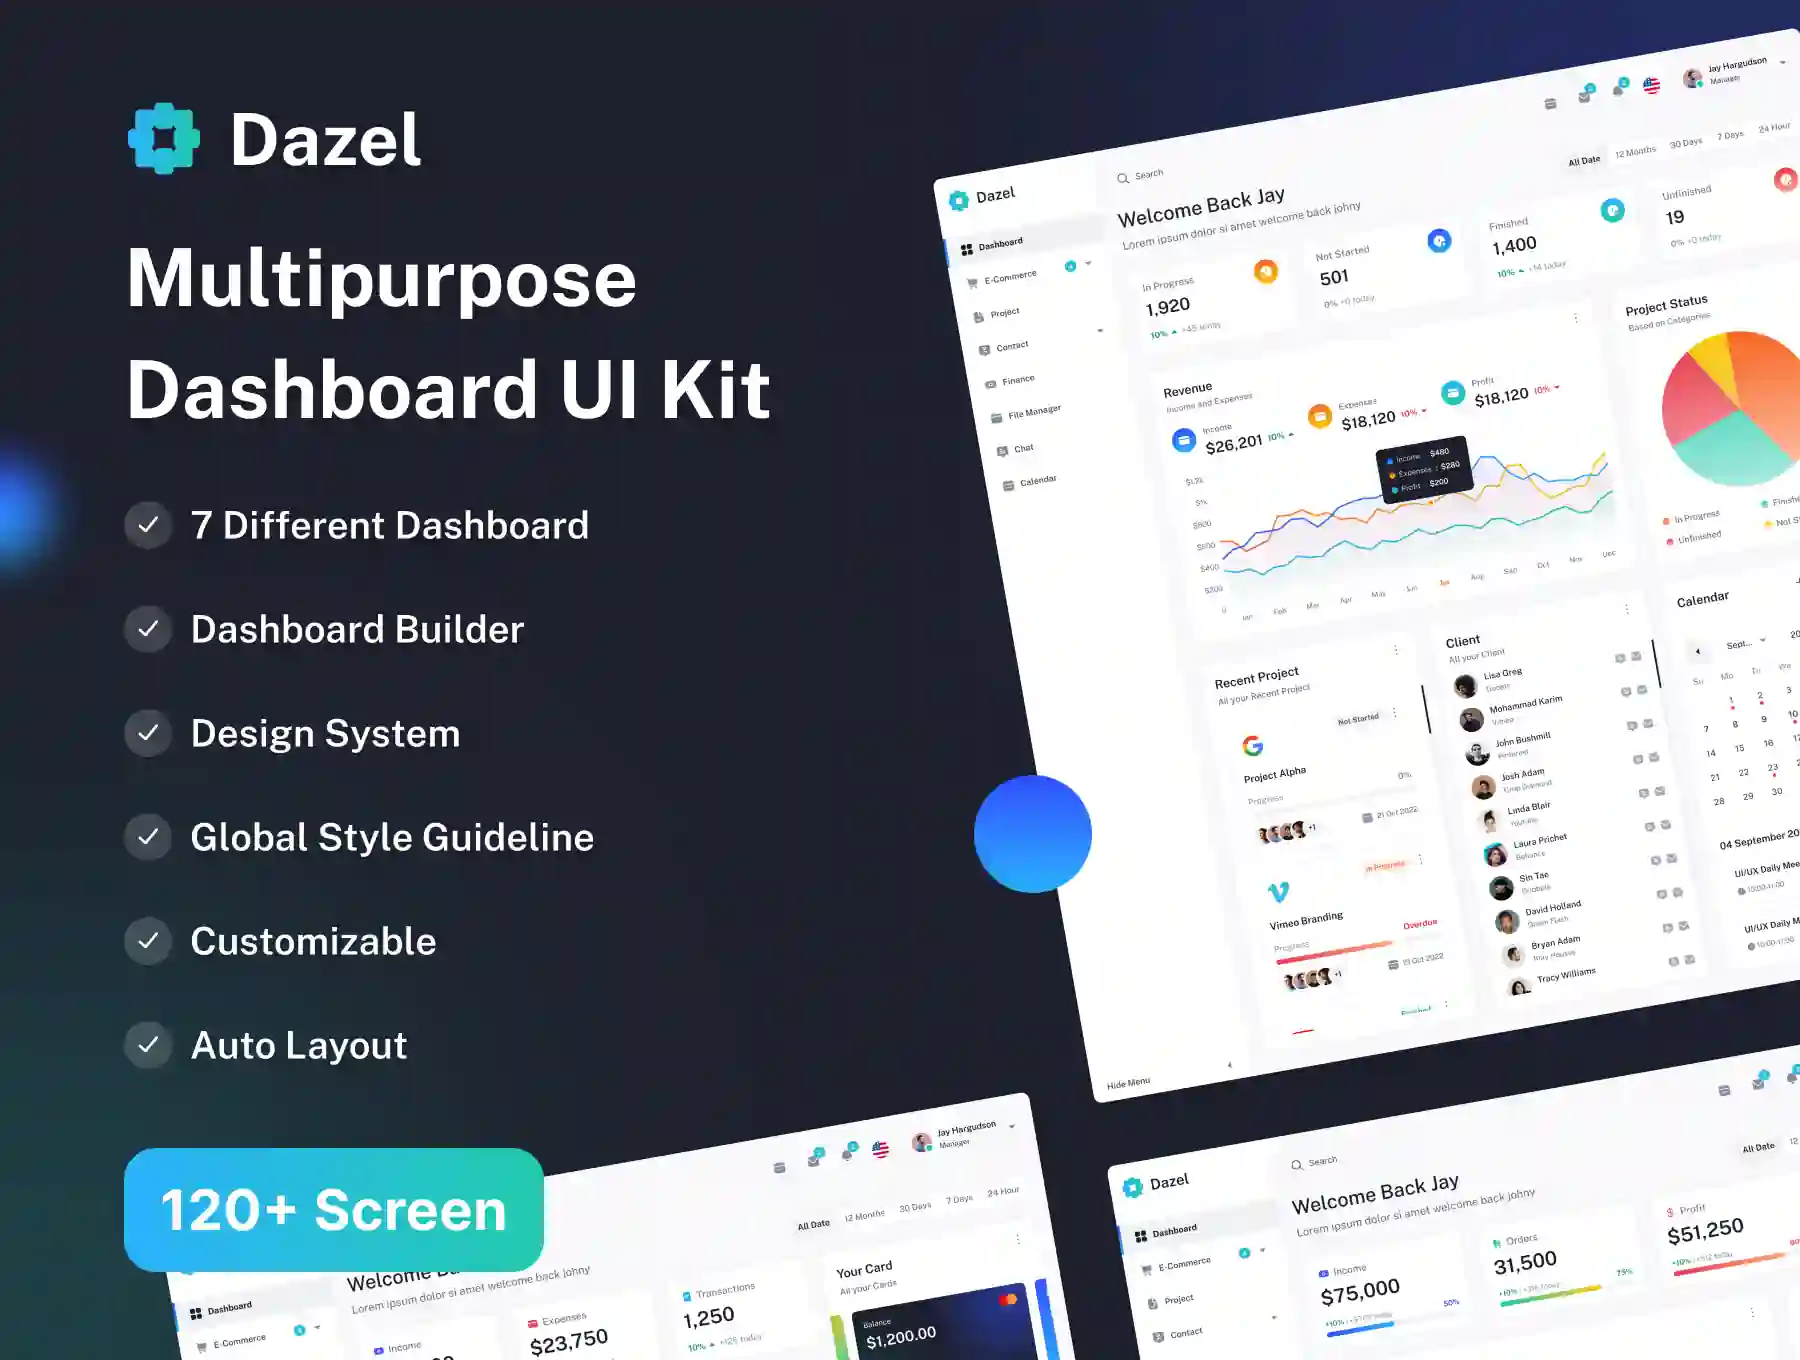 Dazel Dashboard UI Kit